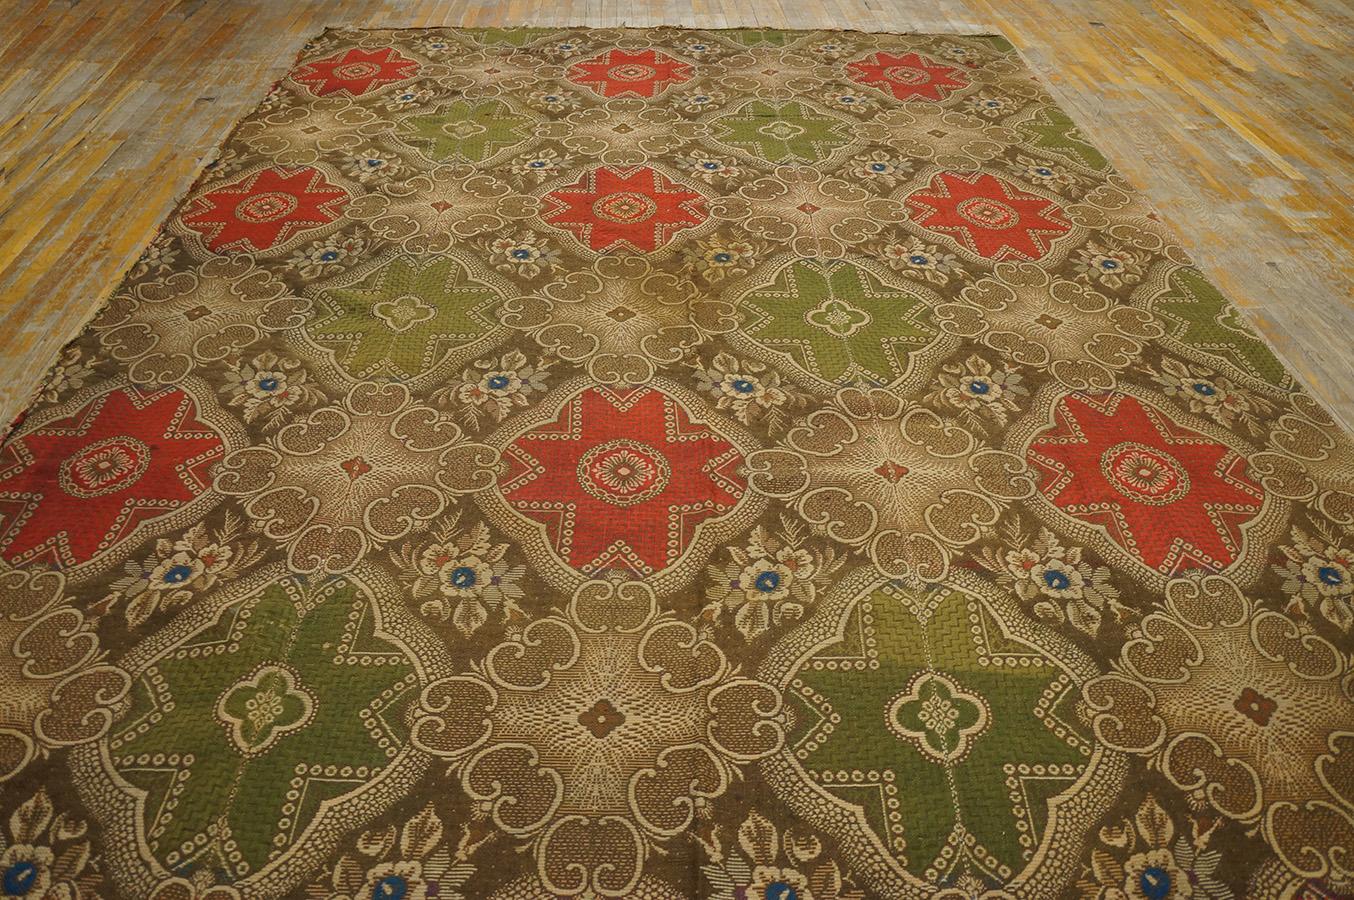 Mid-19th Century Mid 19th Century American Ingrain Carpet ( 8' 2'' x 12' 9'' - 250 x 390 cm ) For Sale